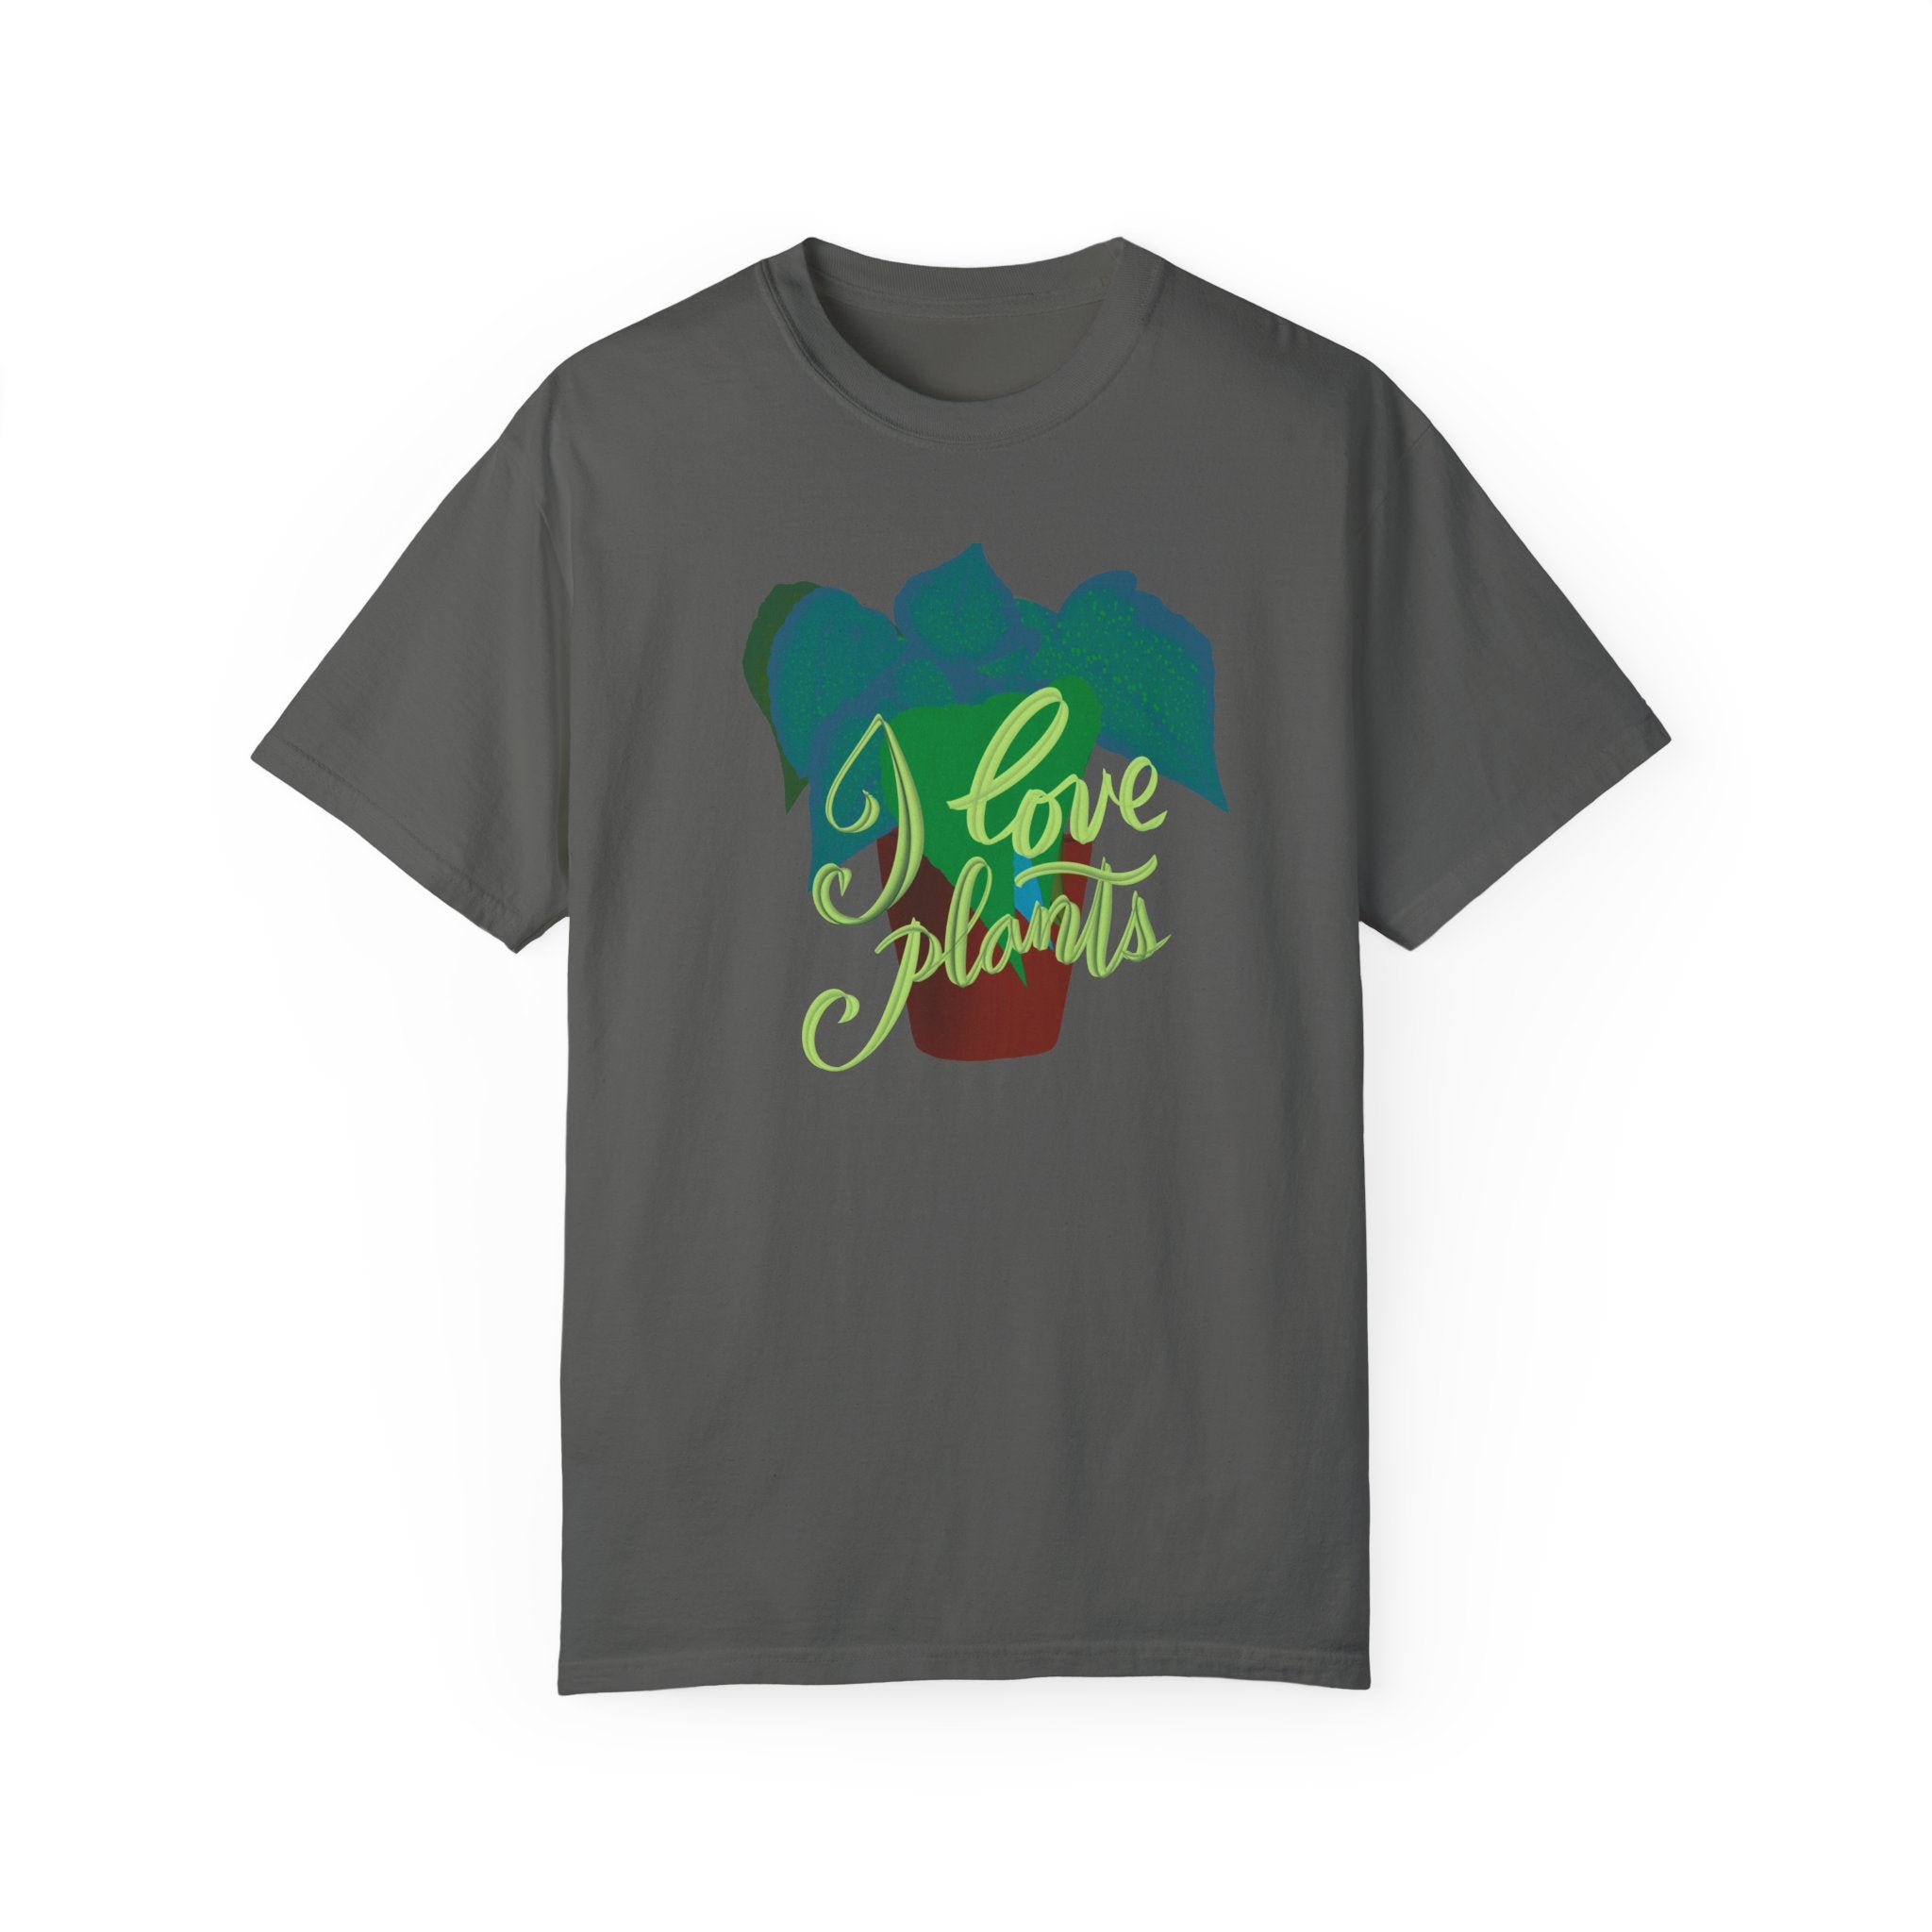 I LOVE PLANTS Unisex Garment-Dyed T-shirt